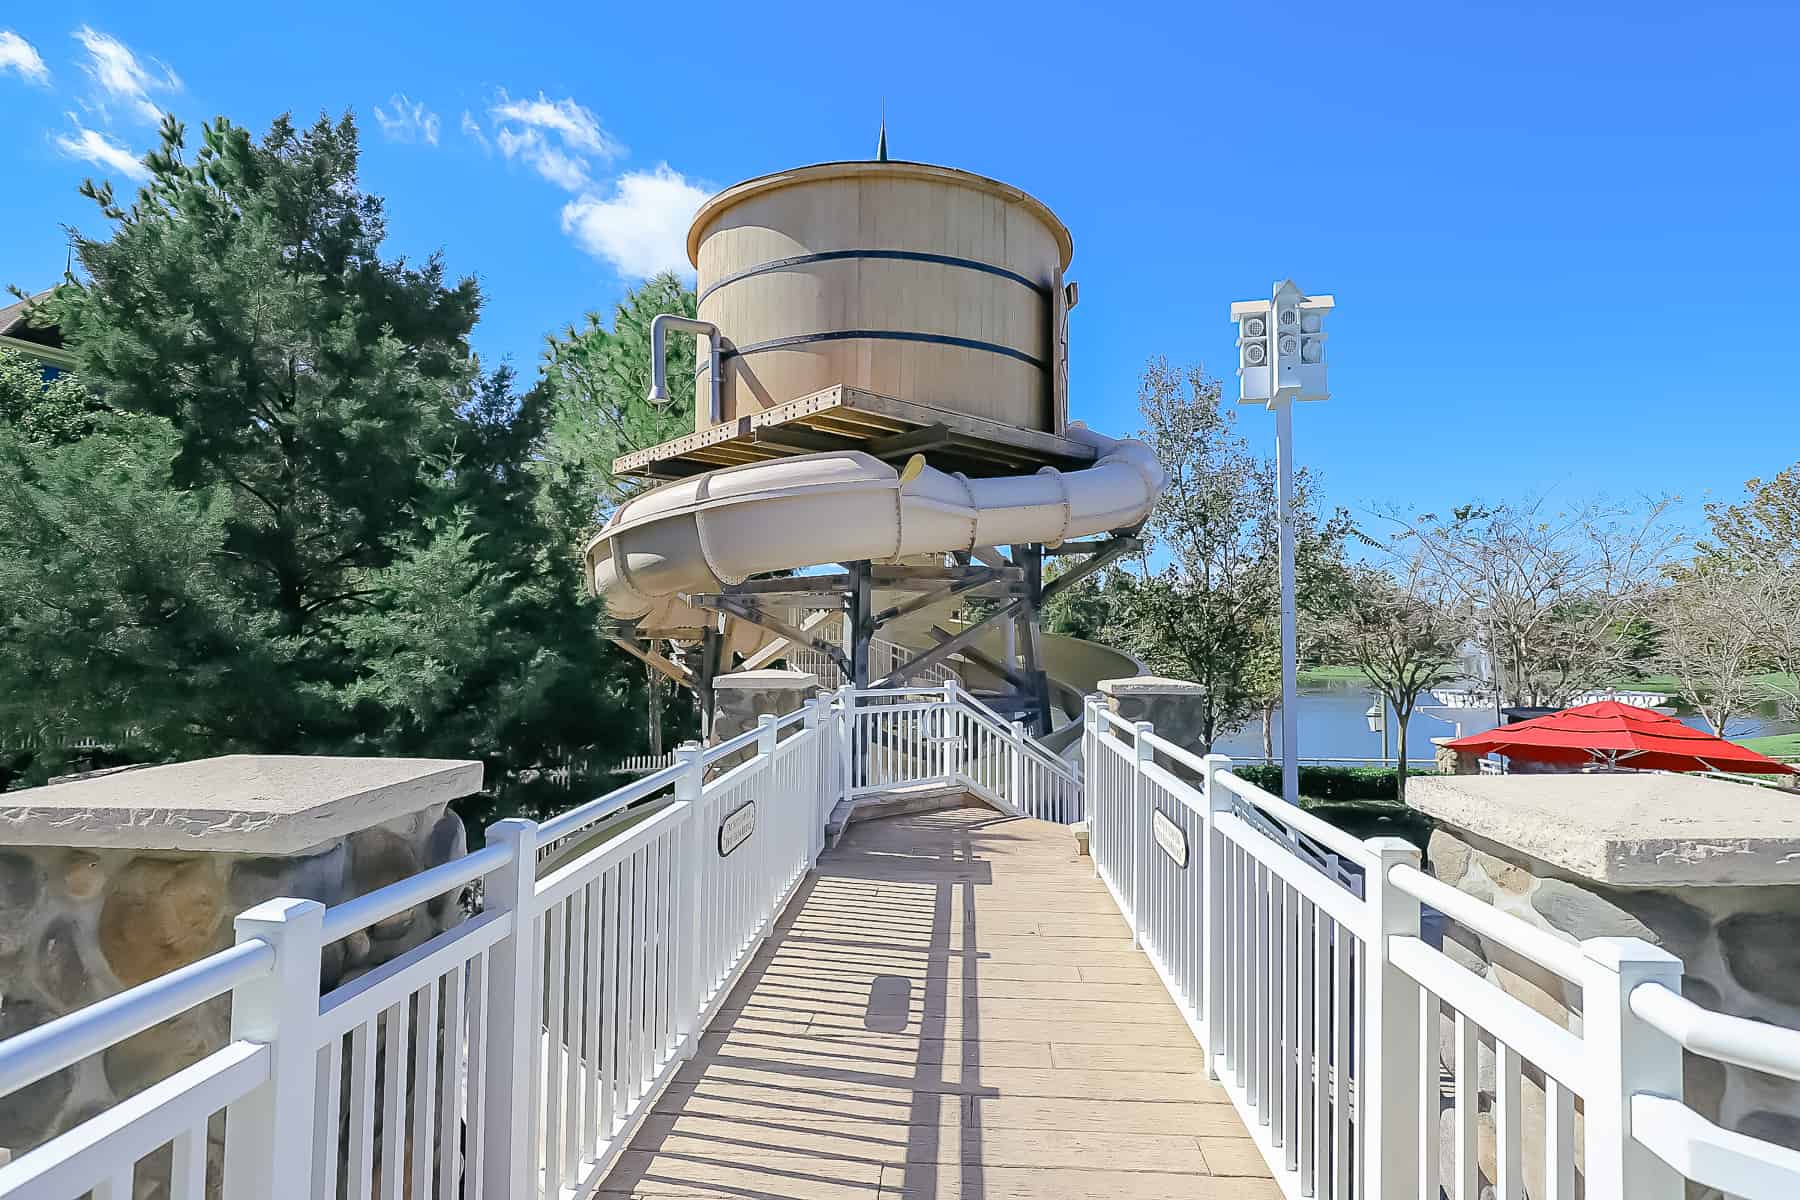 Water Tower slide at the Paddock Pool at Disney Springs 